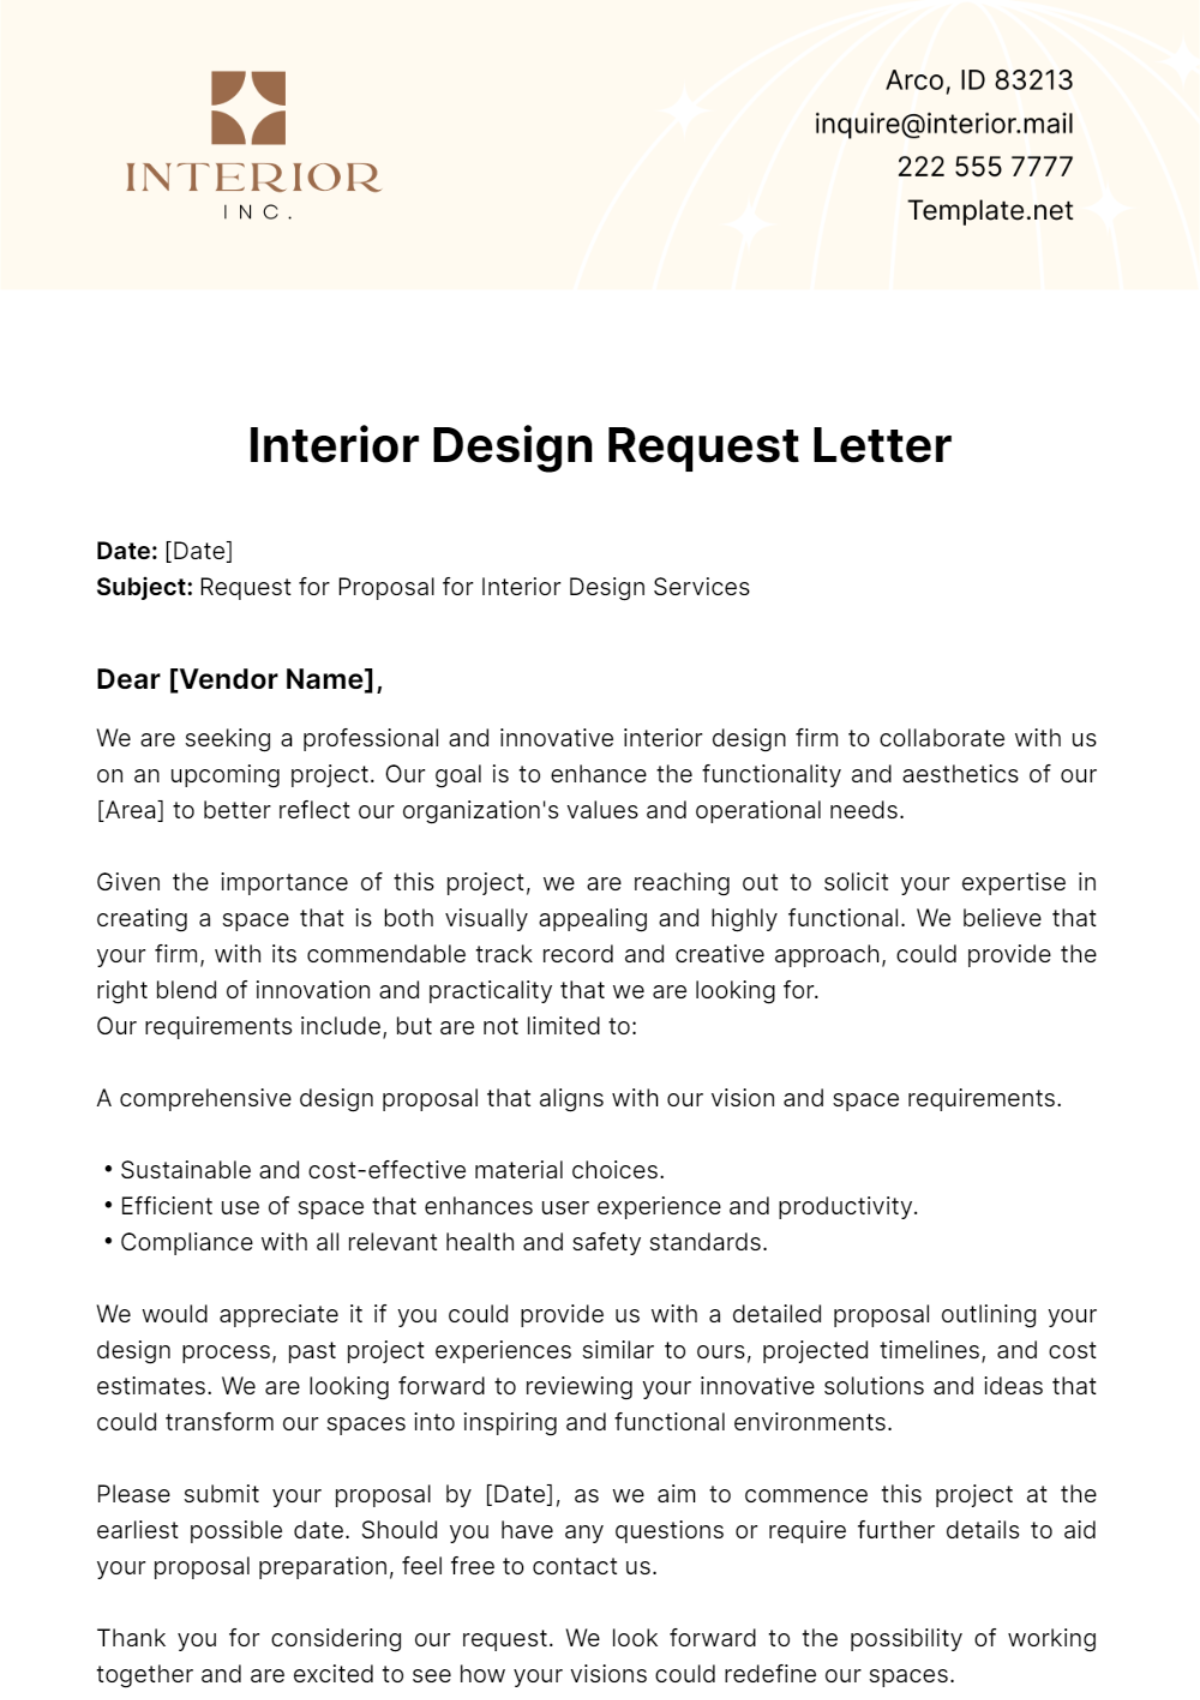 Interior Design Request Letter Template